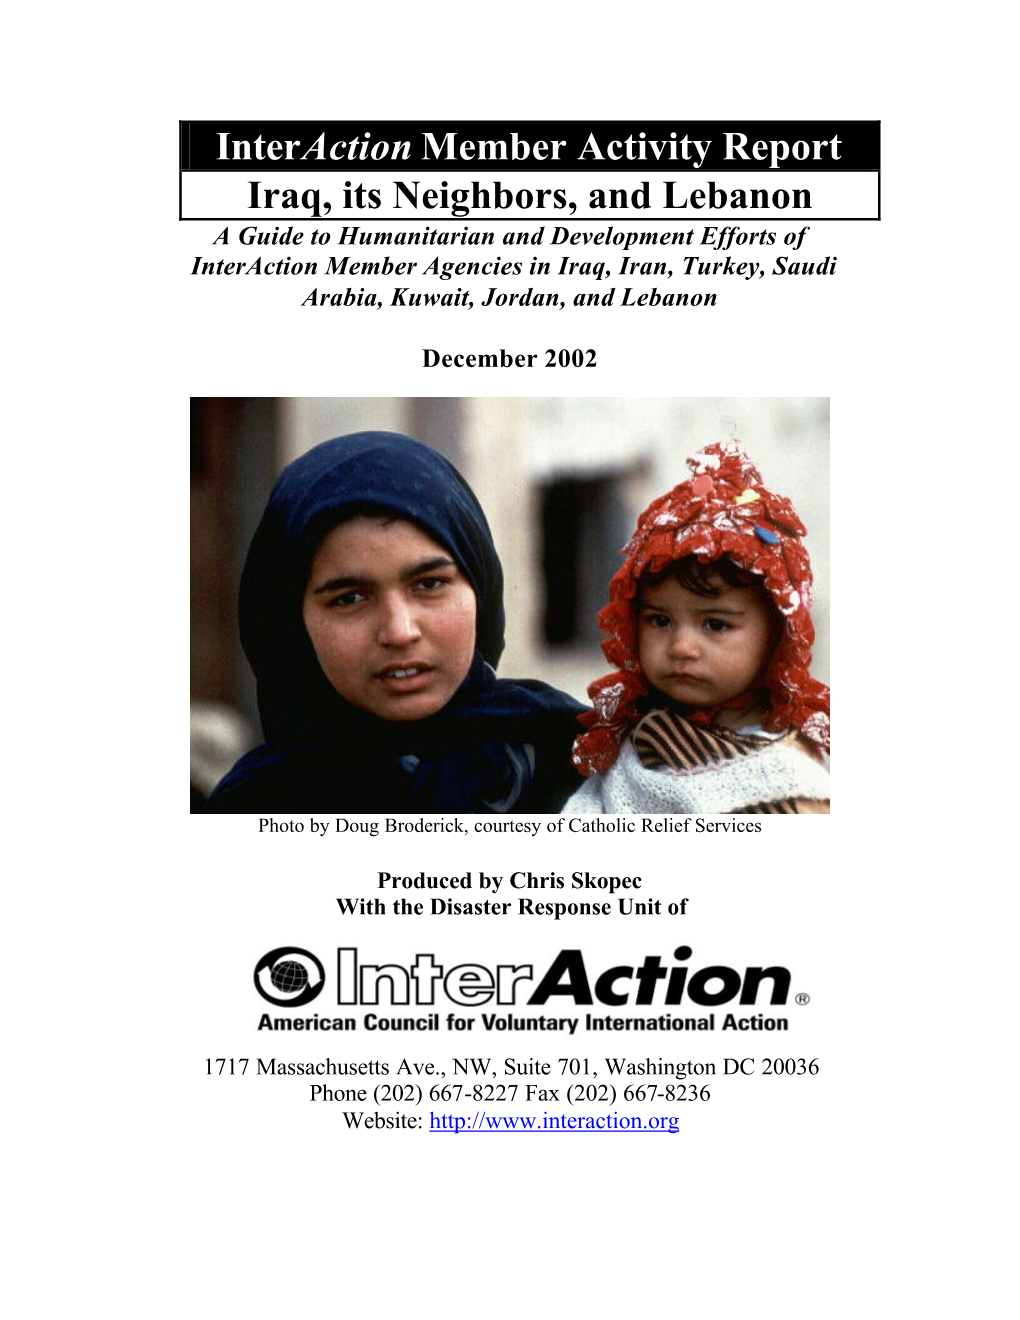 Interaction Member Activity Report Iraq, Its Neighbors, and Lebanon